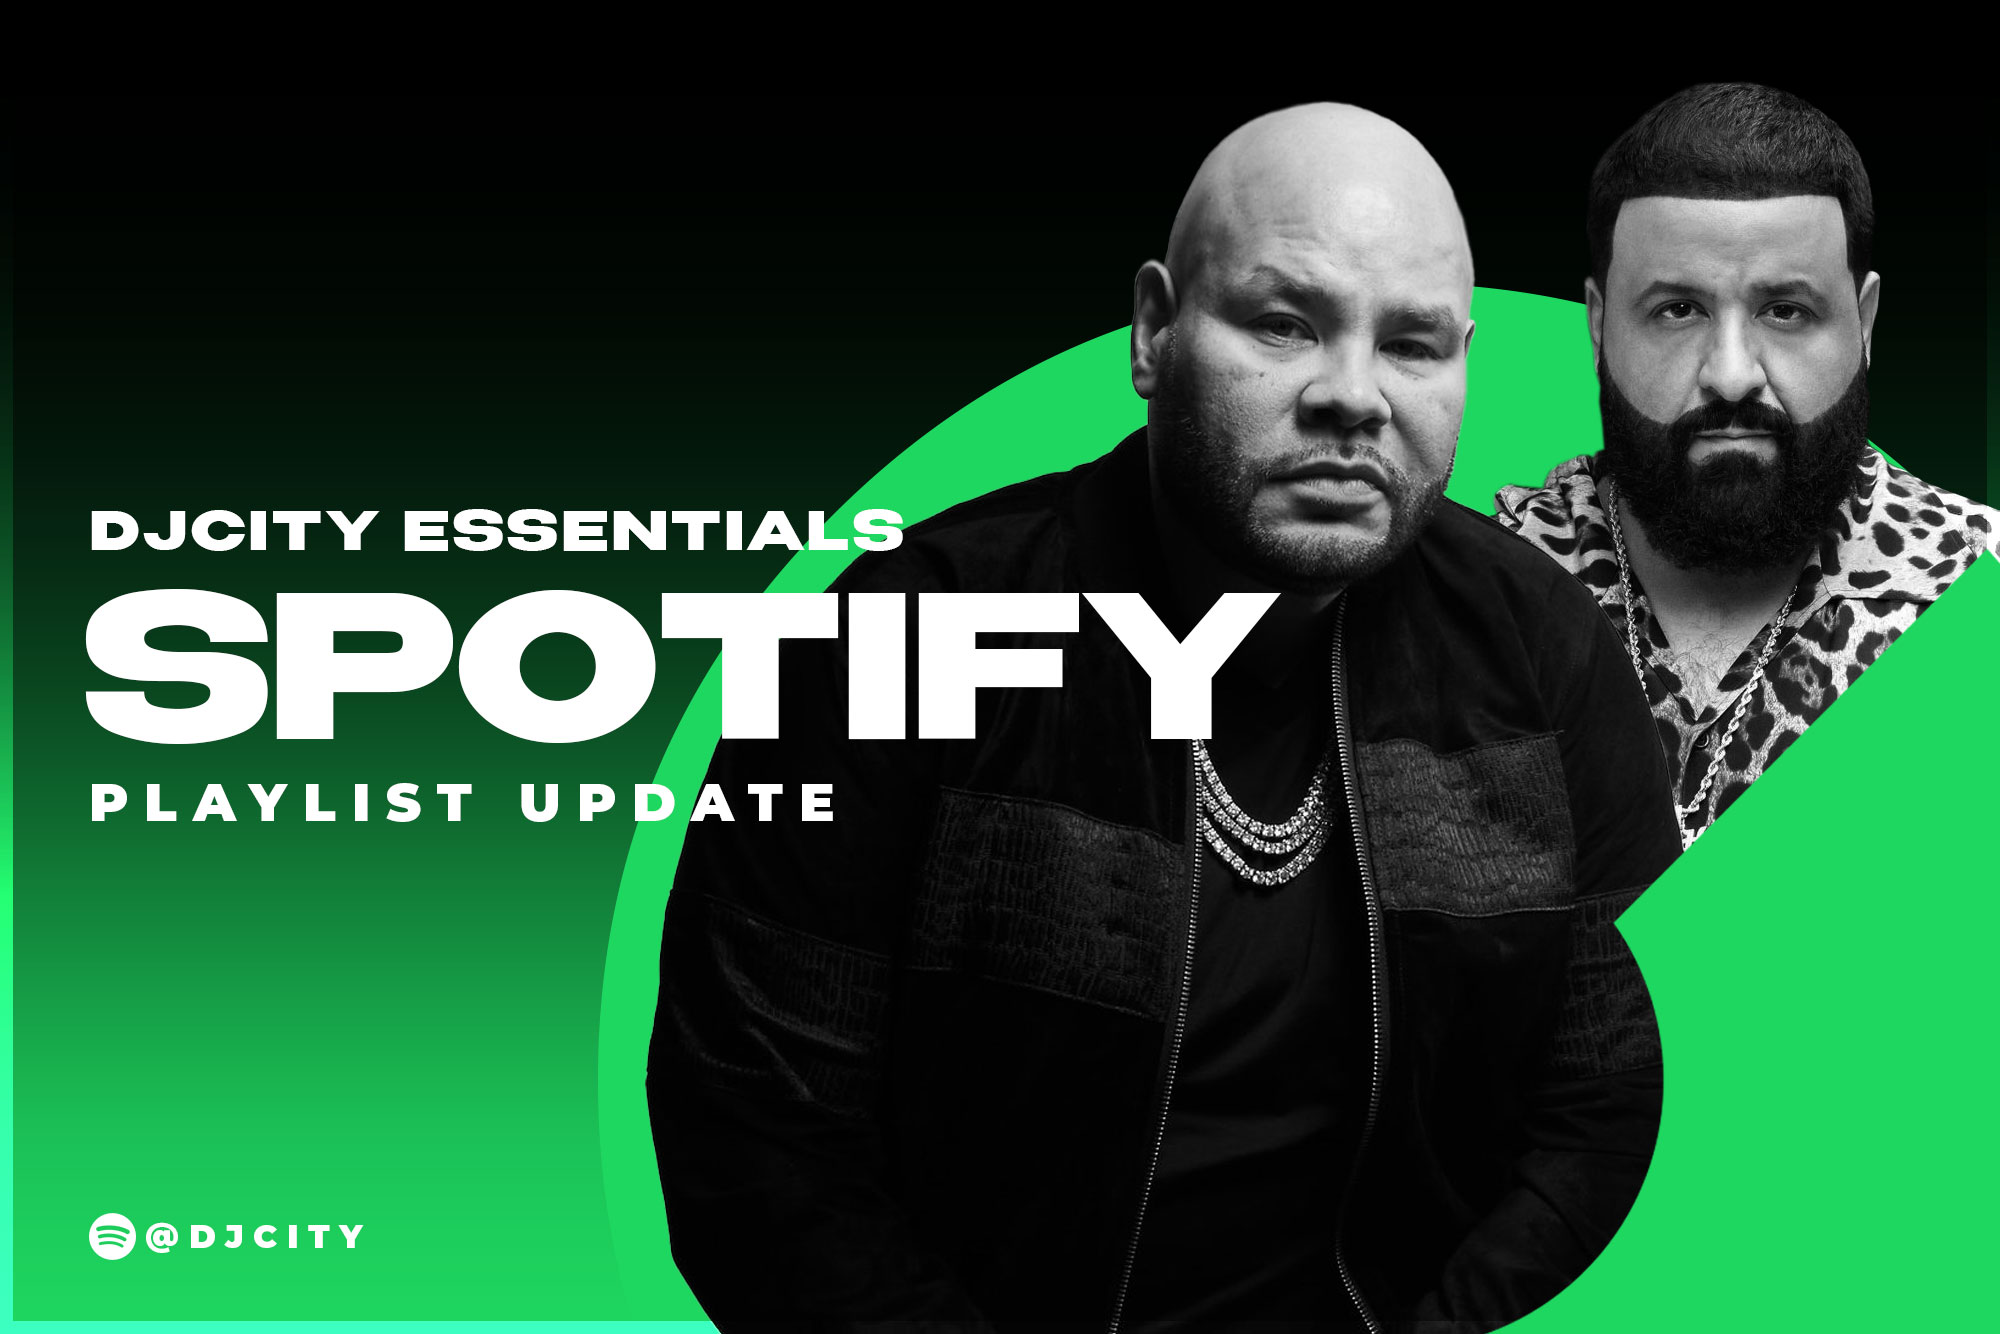 DJcity’s Spotify Playlist Update: Jan. 26